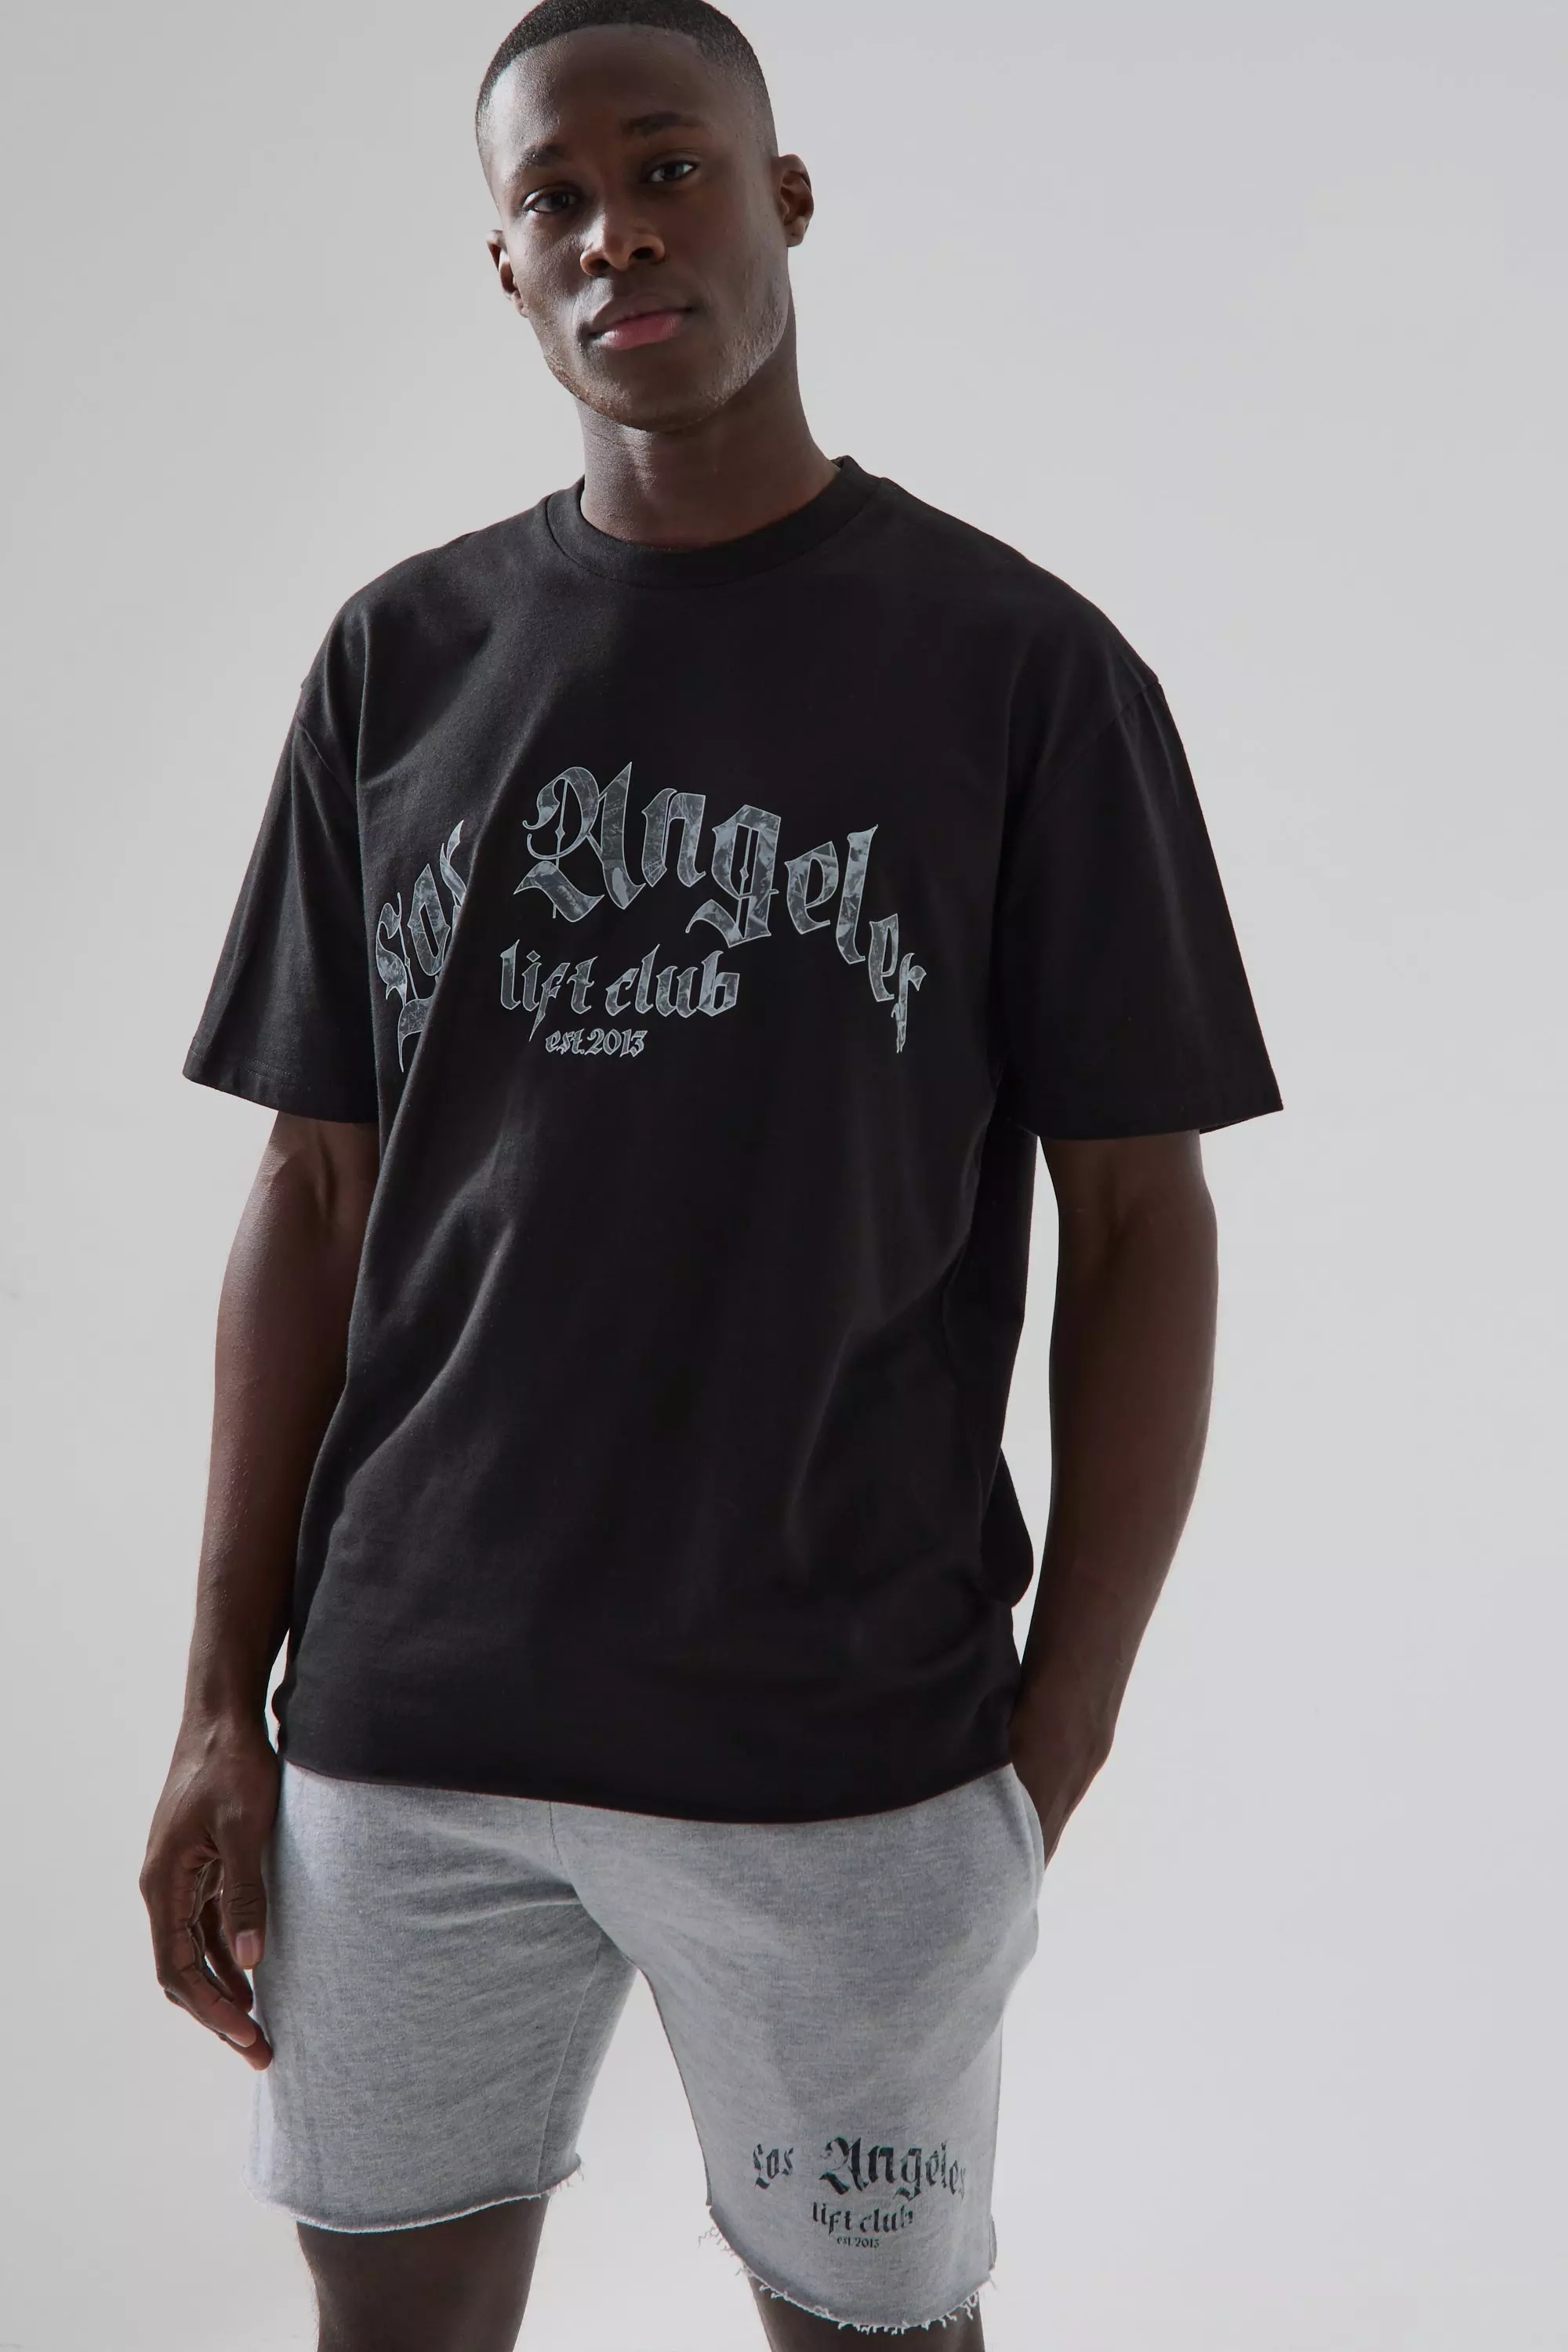 Man Active Los Angeles Lift Club T-shirt Set Black